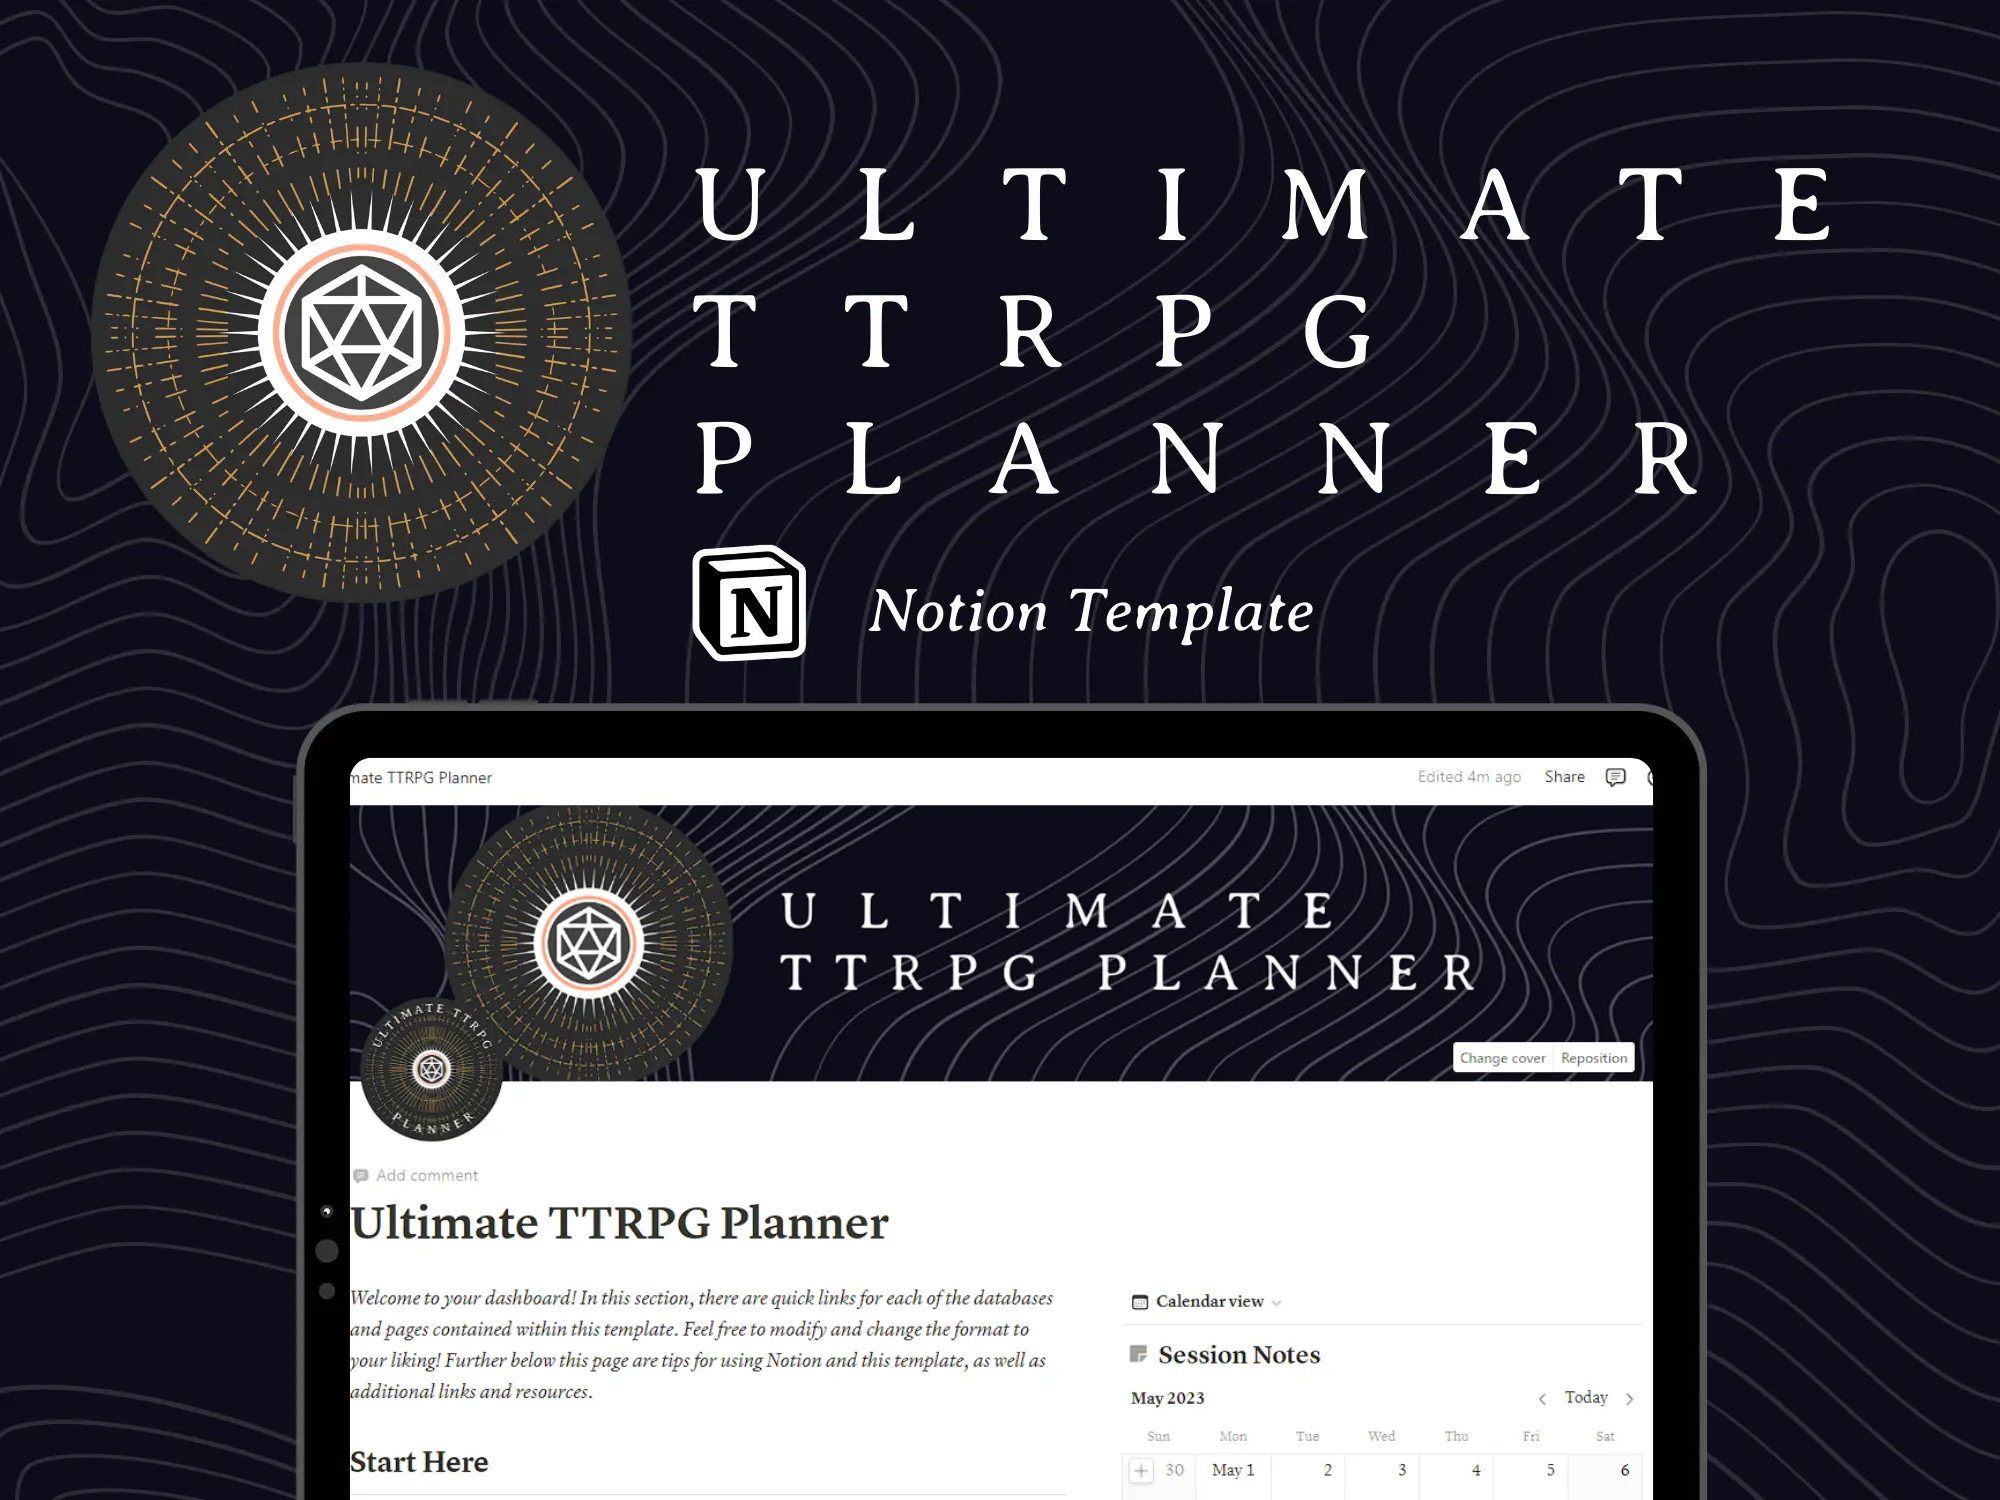 Ultimate TTRPG Planner Notion Template image